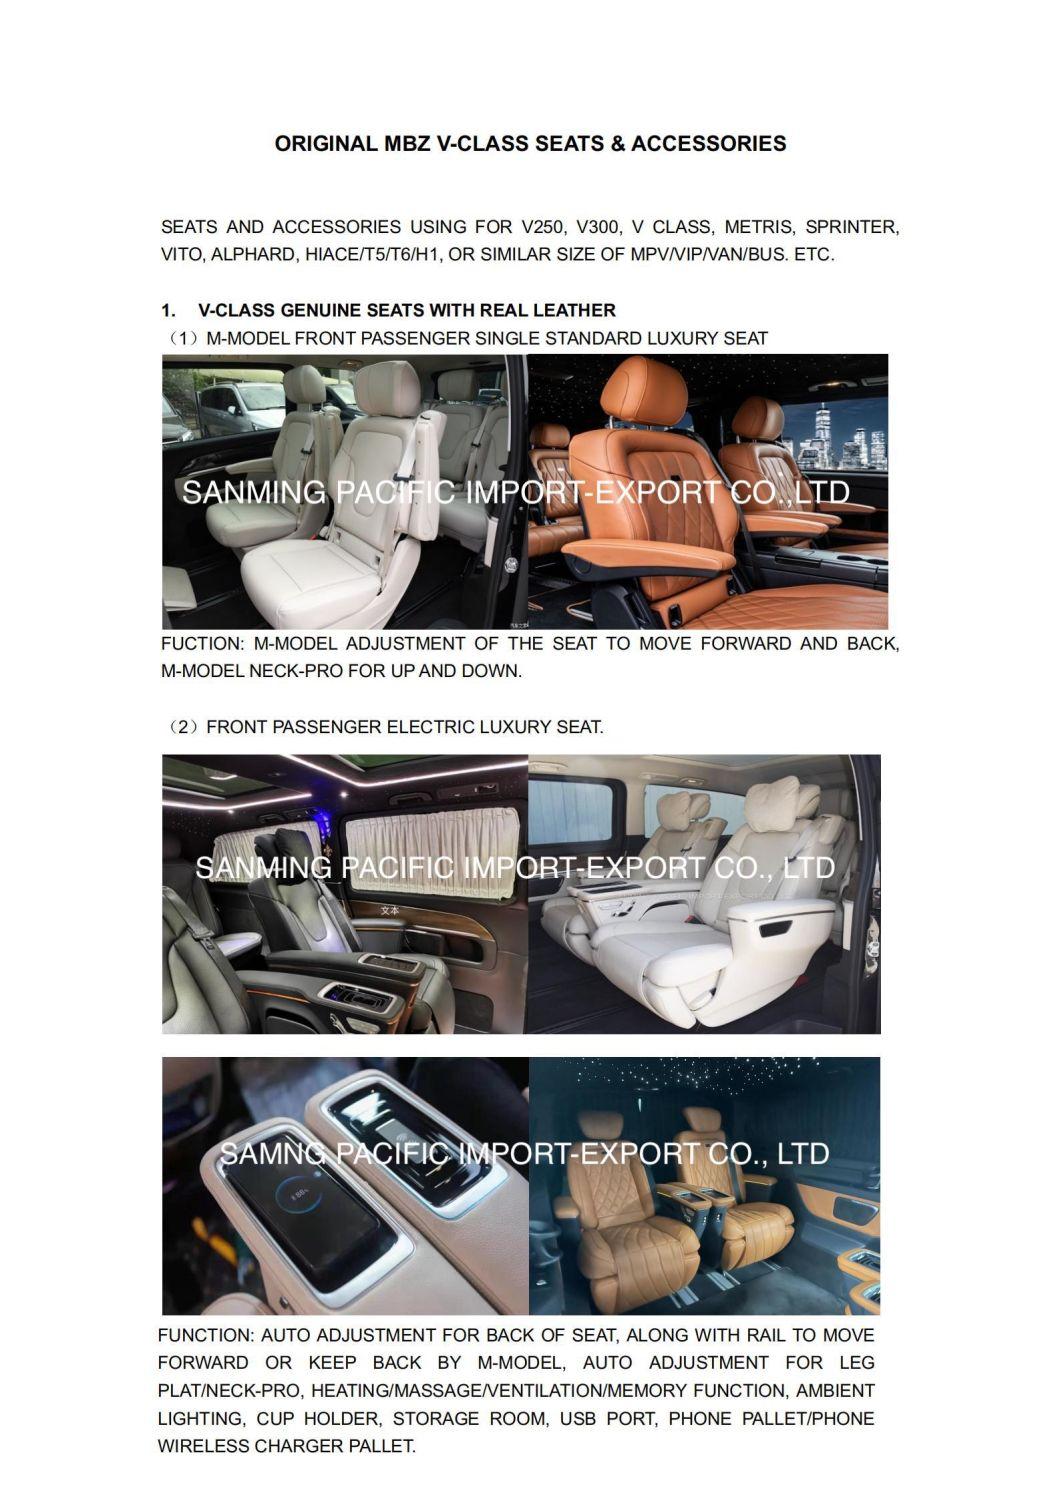 Vito/V-Class/Metris/Sprinter/Viano Inner Parts & Spares VIP/Auto/Electric Luxury Seat for Modification/Conversion